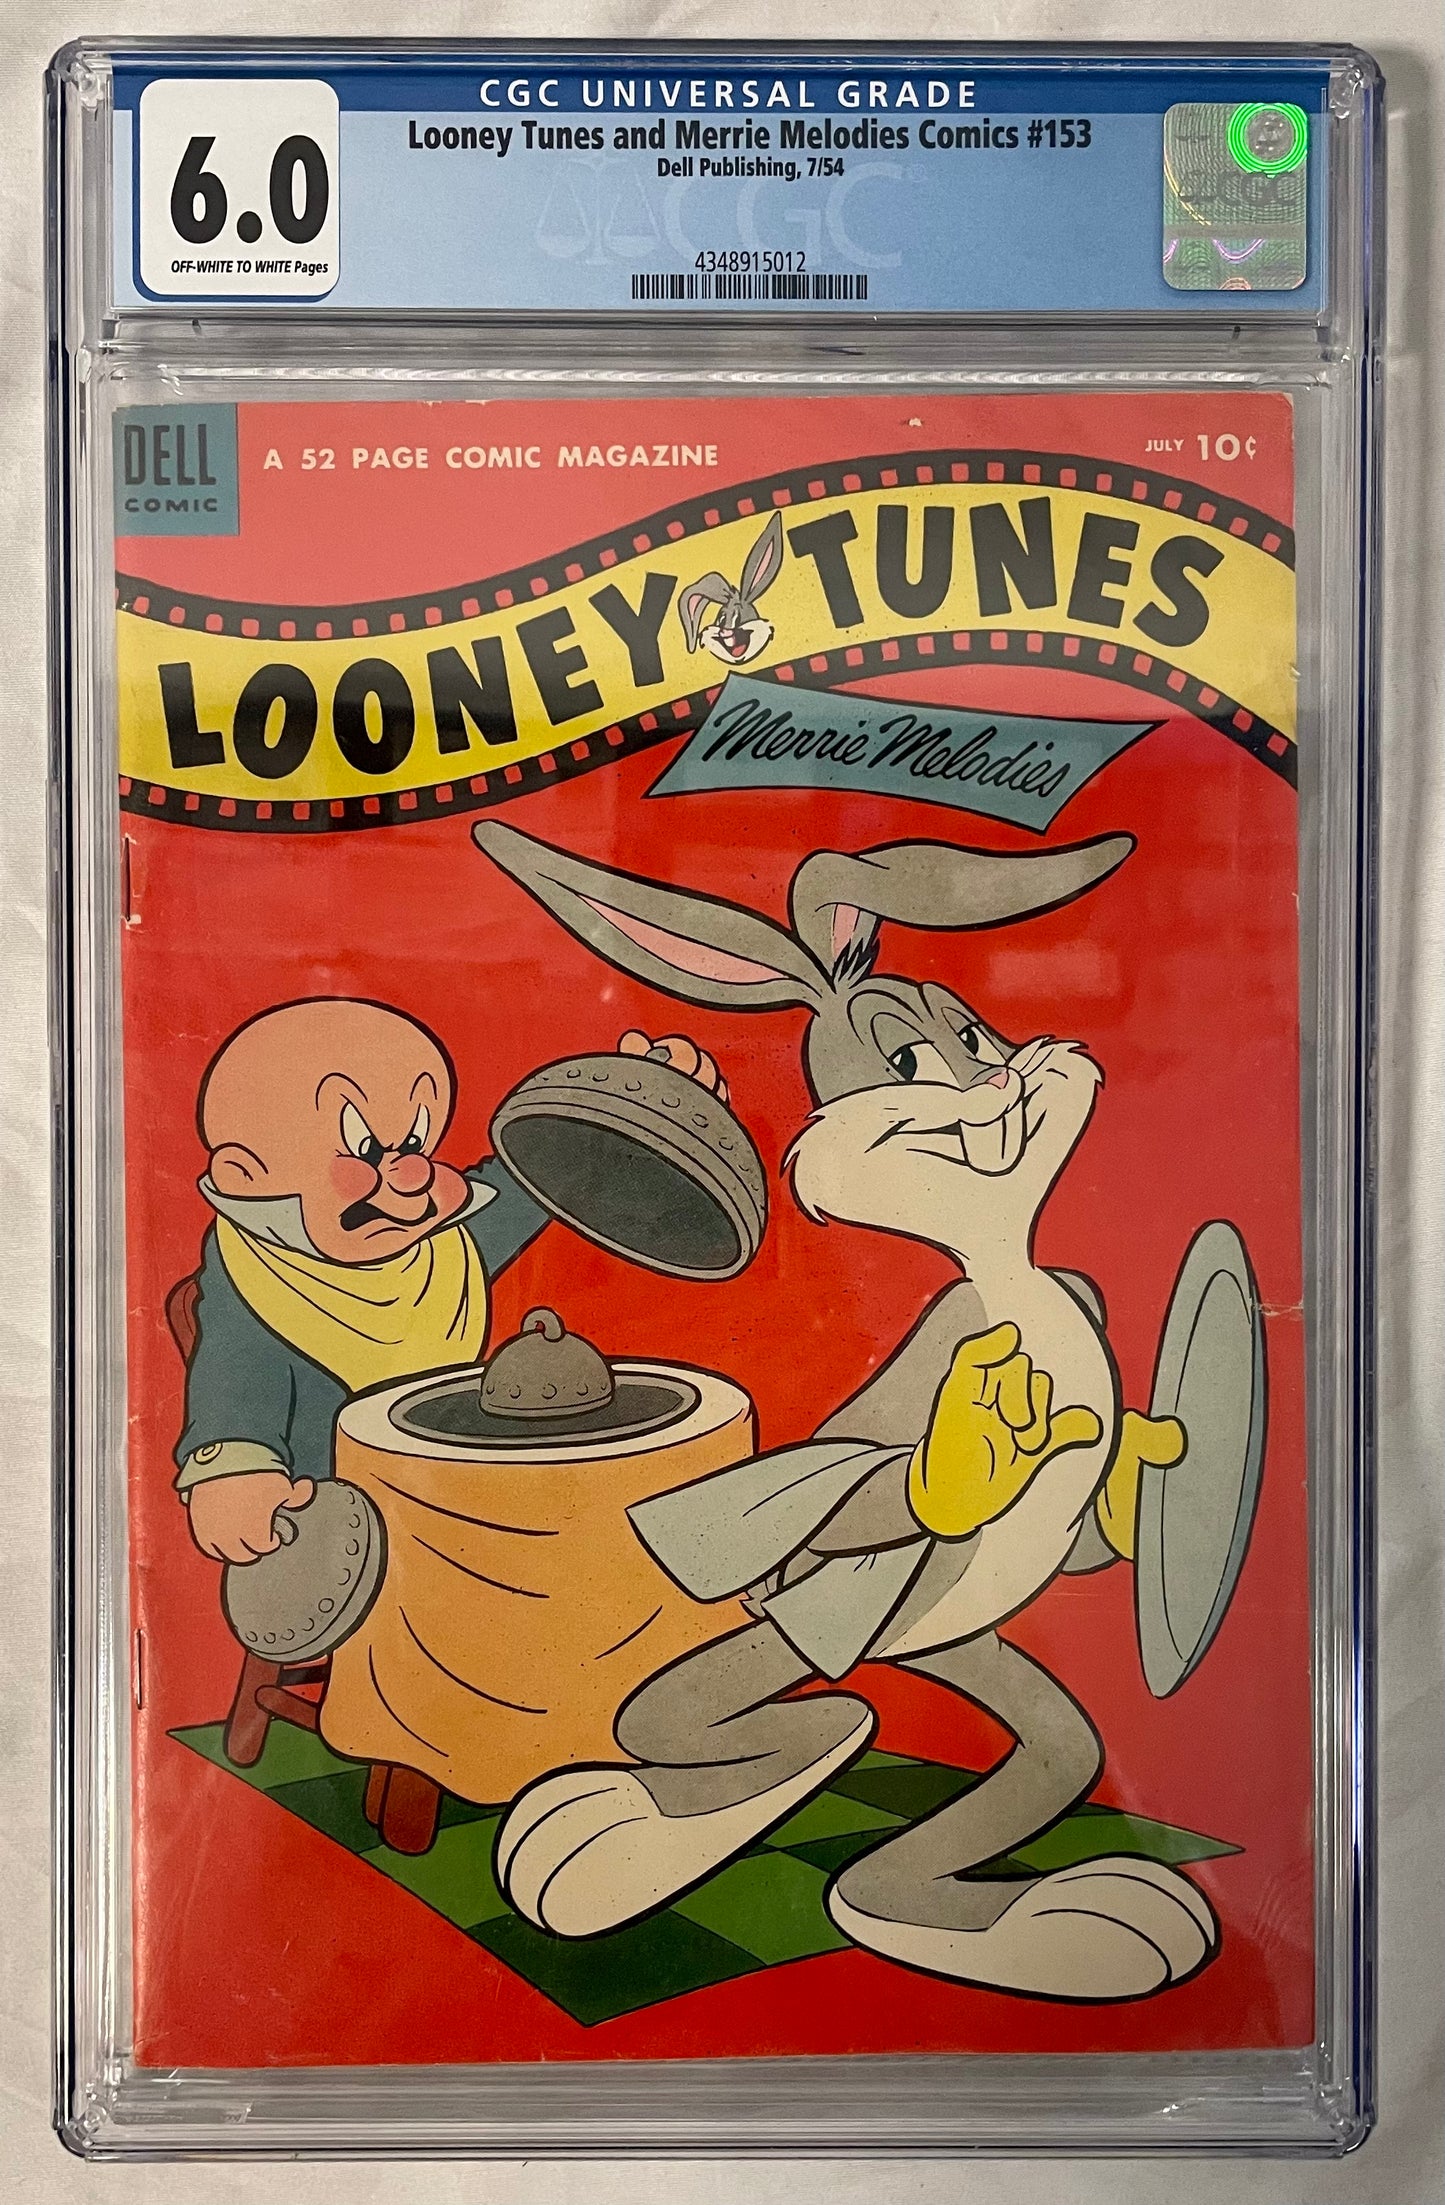 Dell Comics Looney Toons and Merrie Melodies Comics #153 CGC 6.0